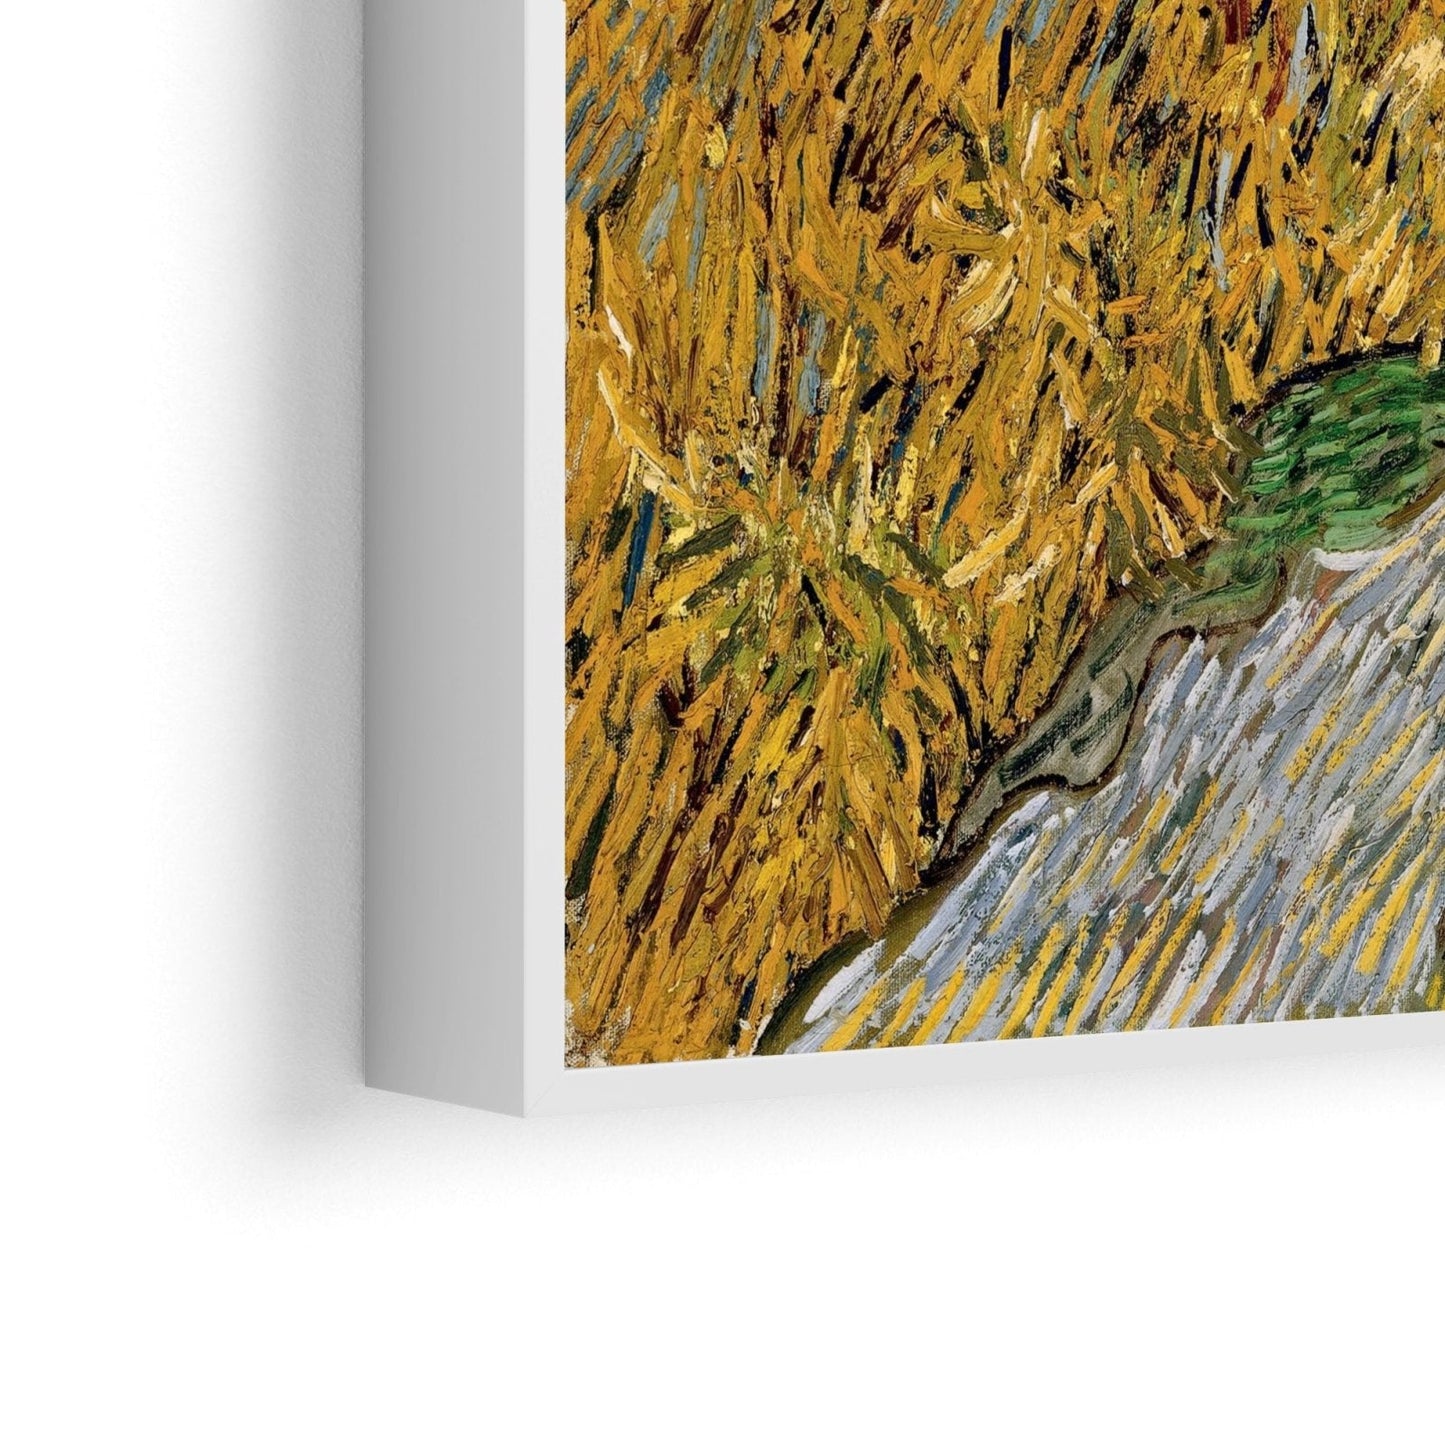 Cesta s cyprusom a hviezdou, Vincent Van Gogh